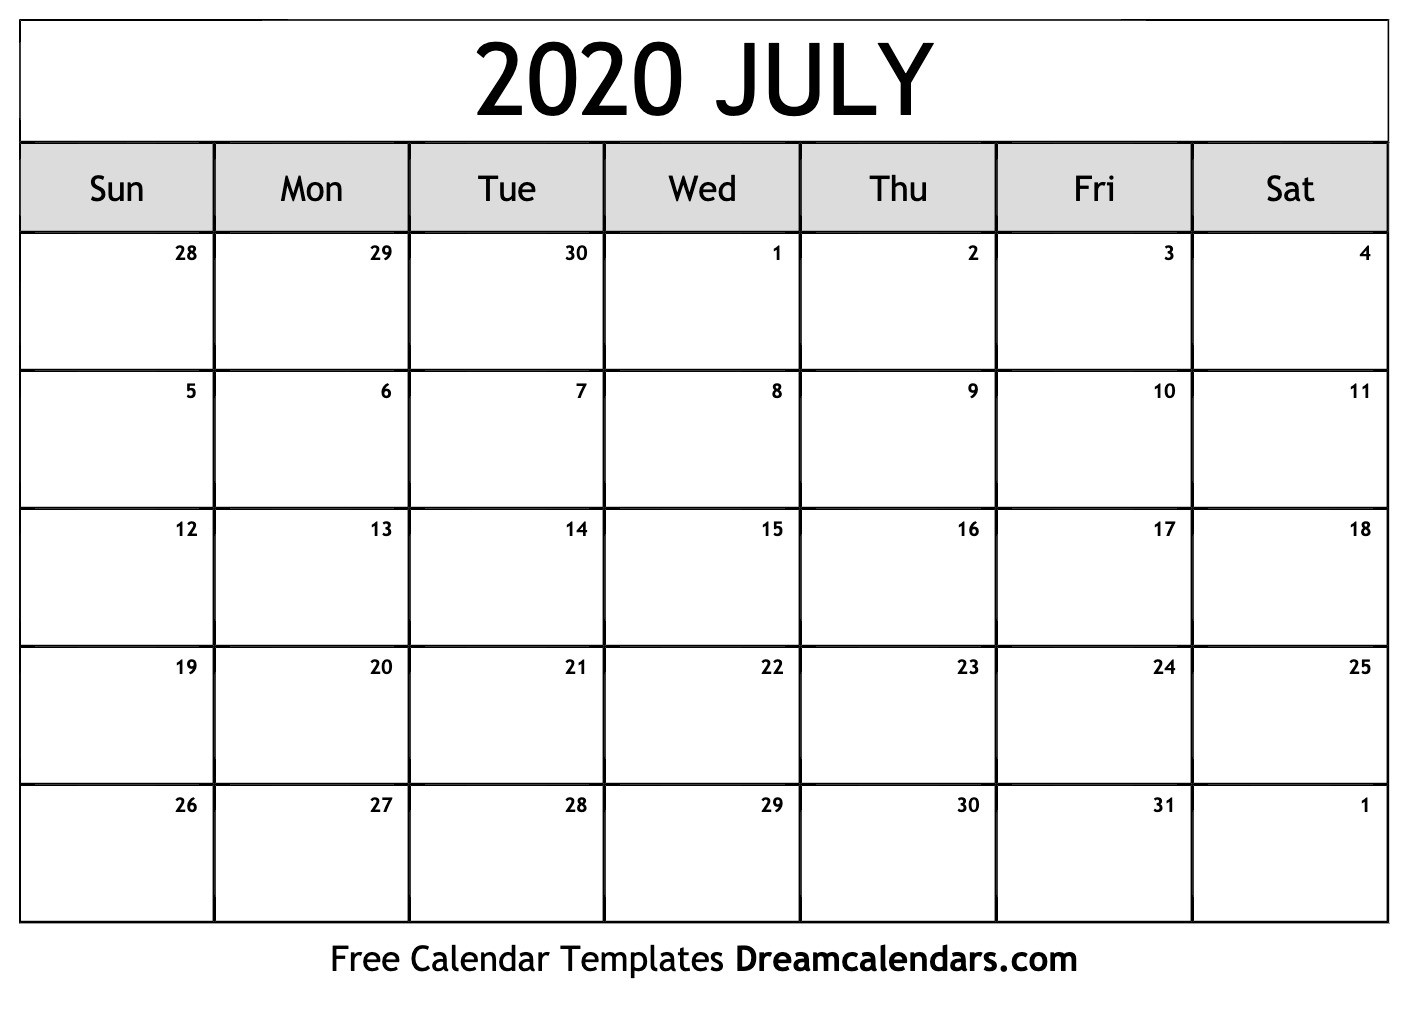 Free Blank July 2020 Printable Calendar-5 Day Calander Template July 2020